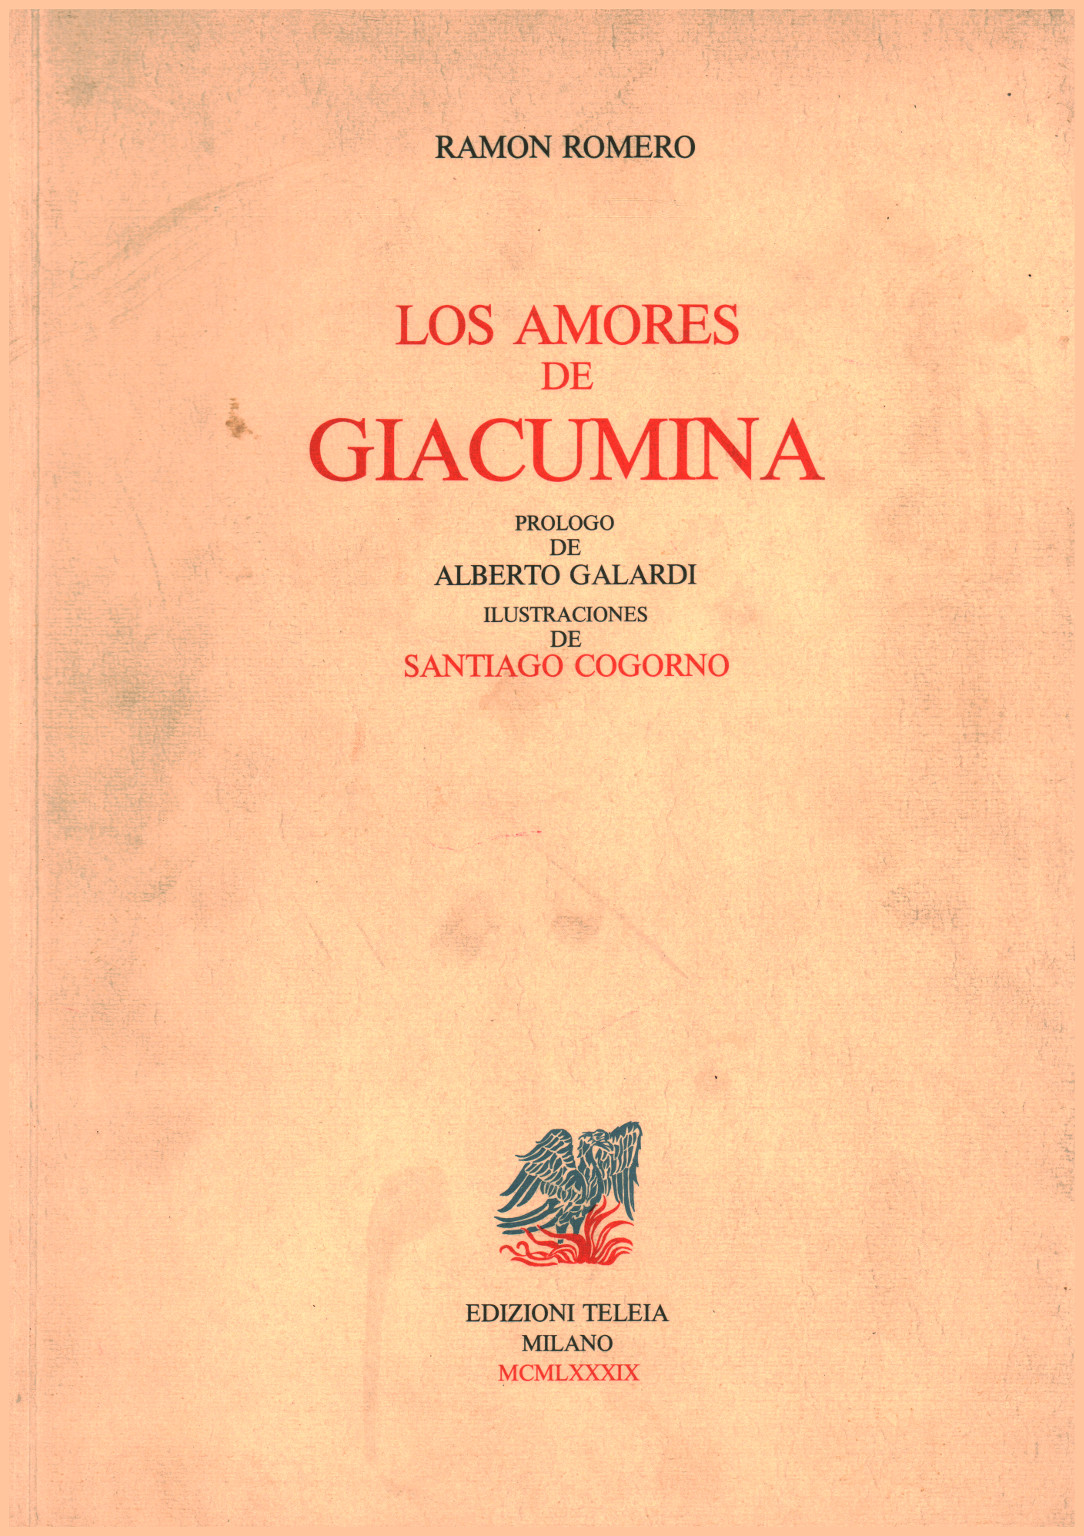 Los amores de Giacumina, s.a.